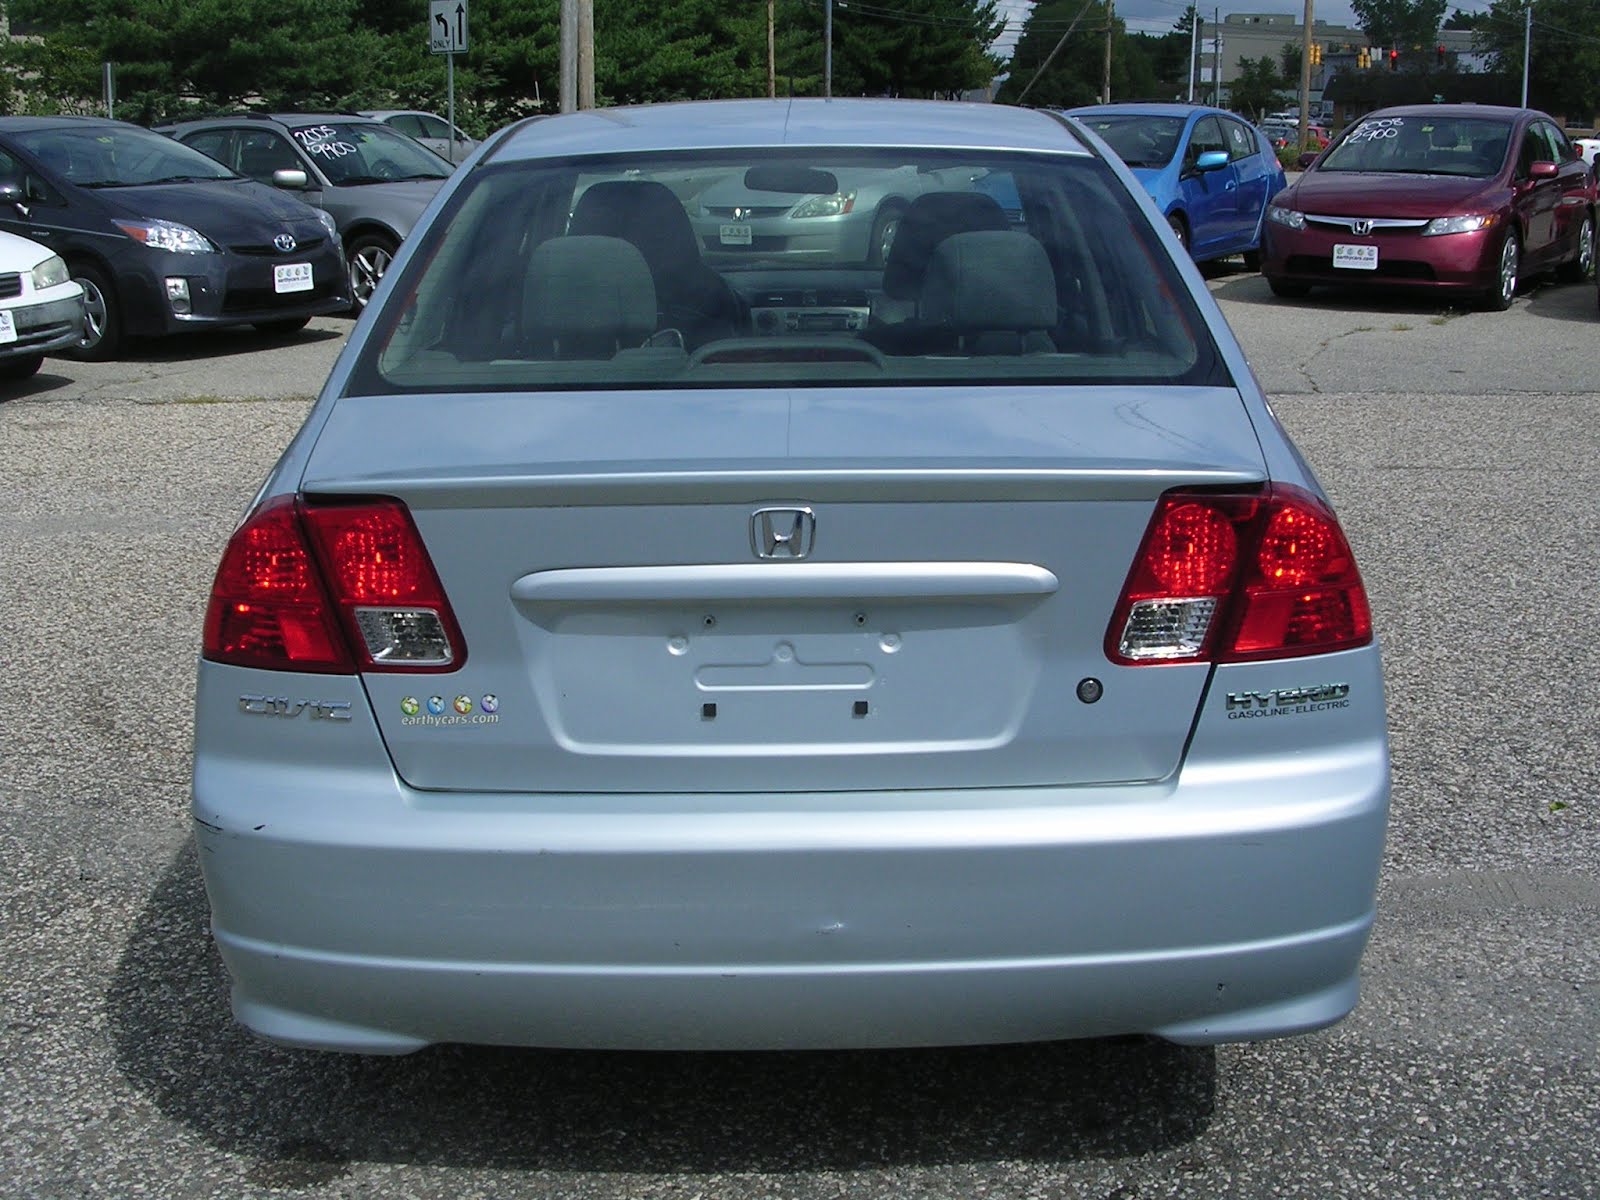 Earthy Cars Blog: EARTHY CAR OF THE WEEK: 2004 Honda Civic Hybrid w/ ULEV